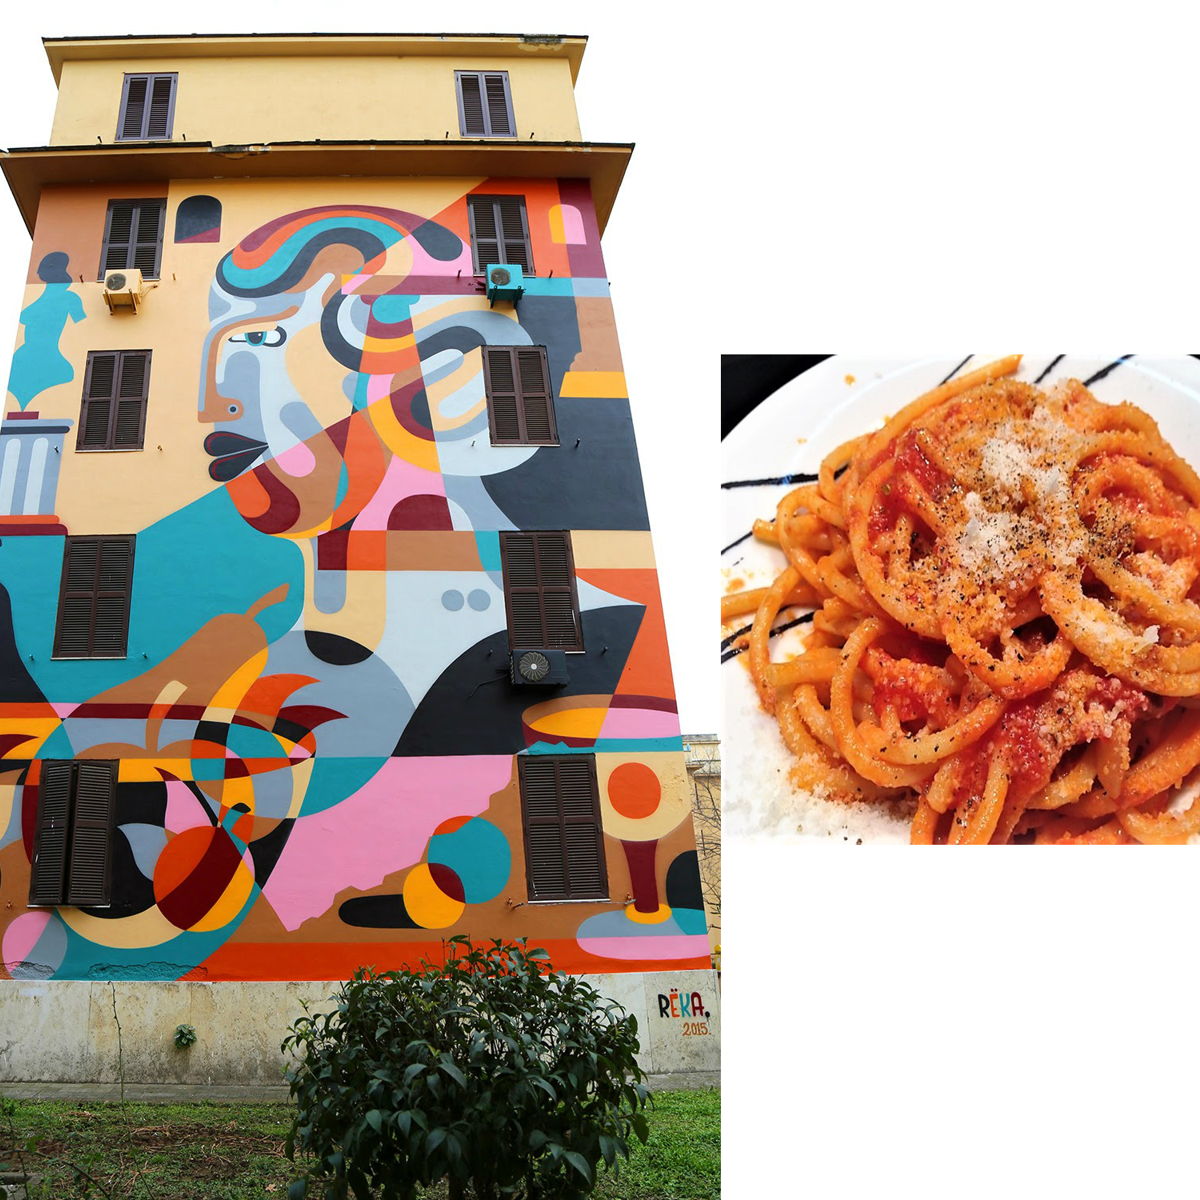 Roman street art tour and pasta lunch